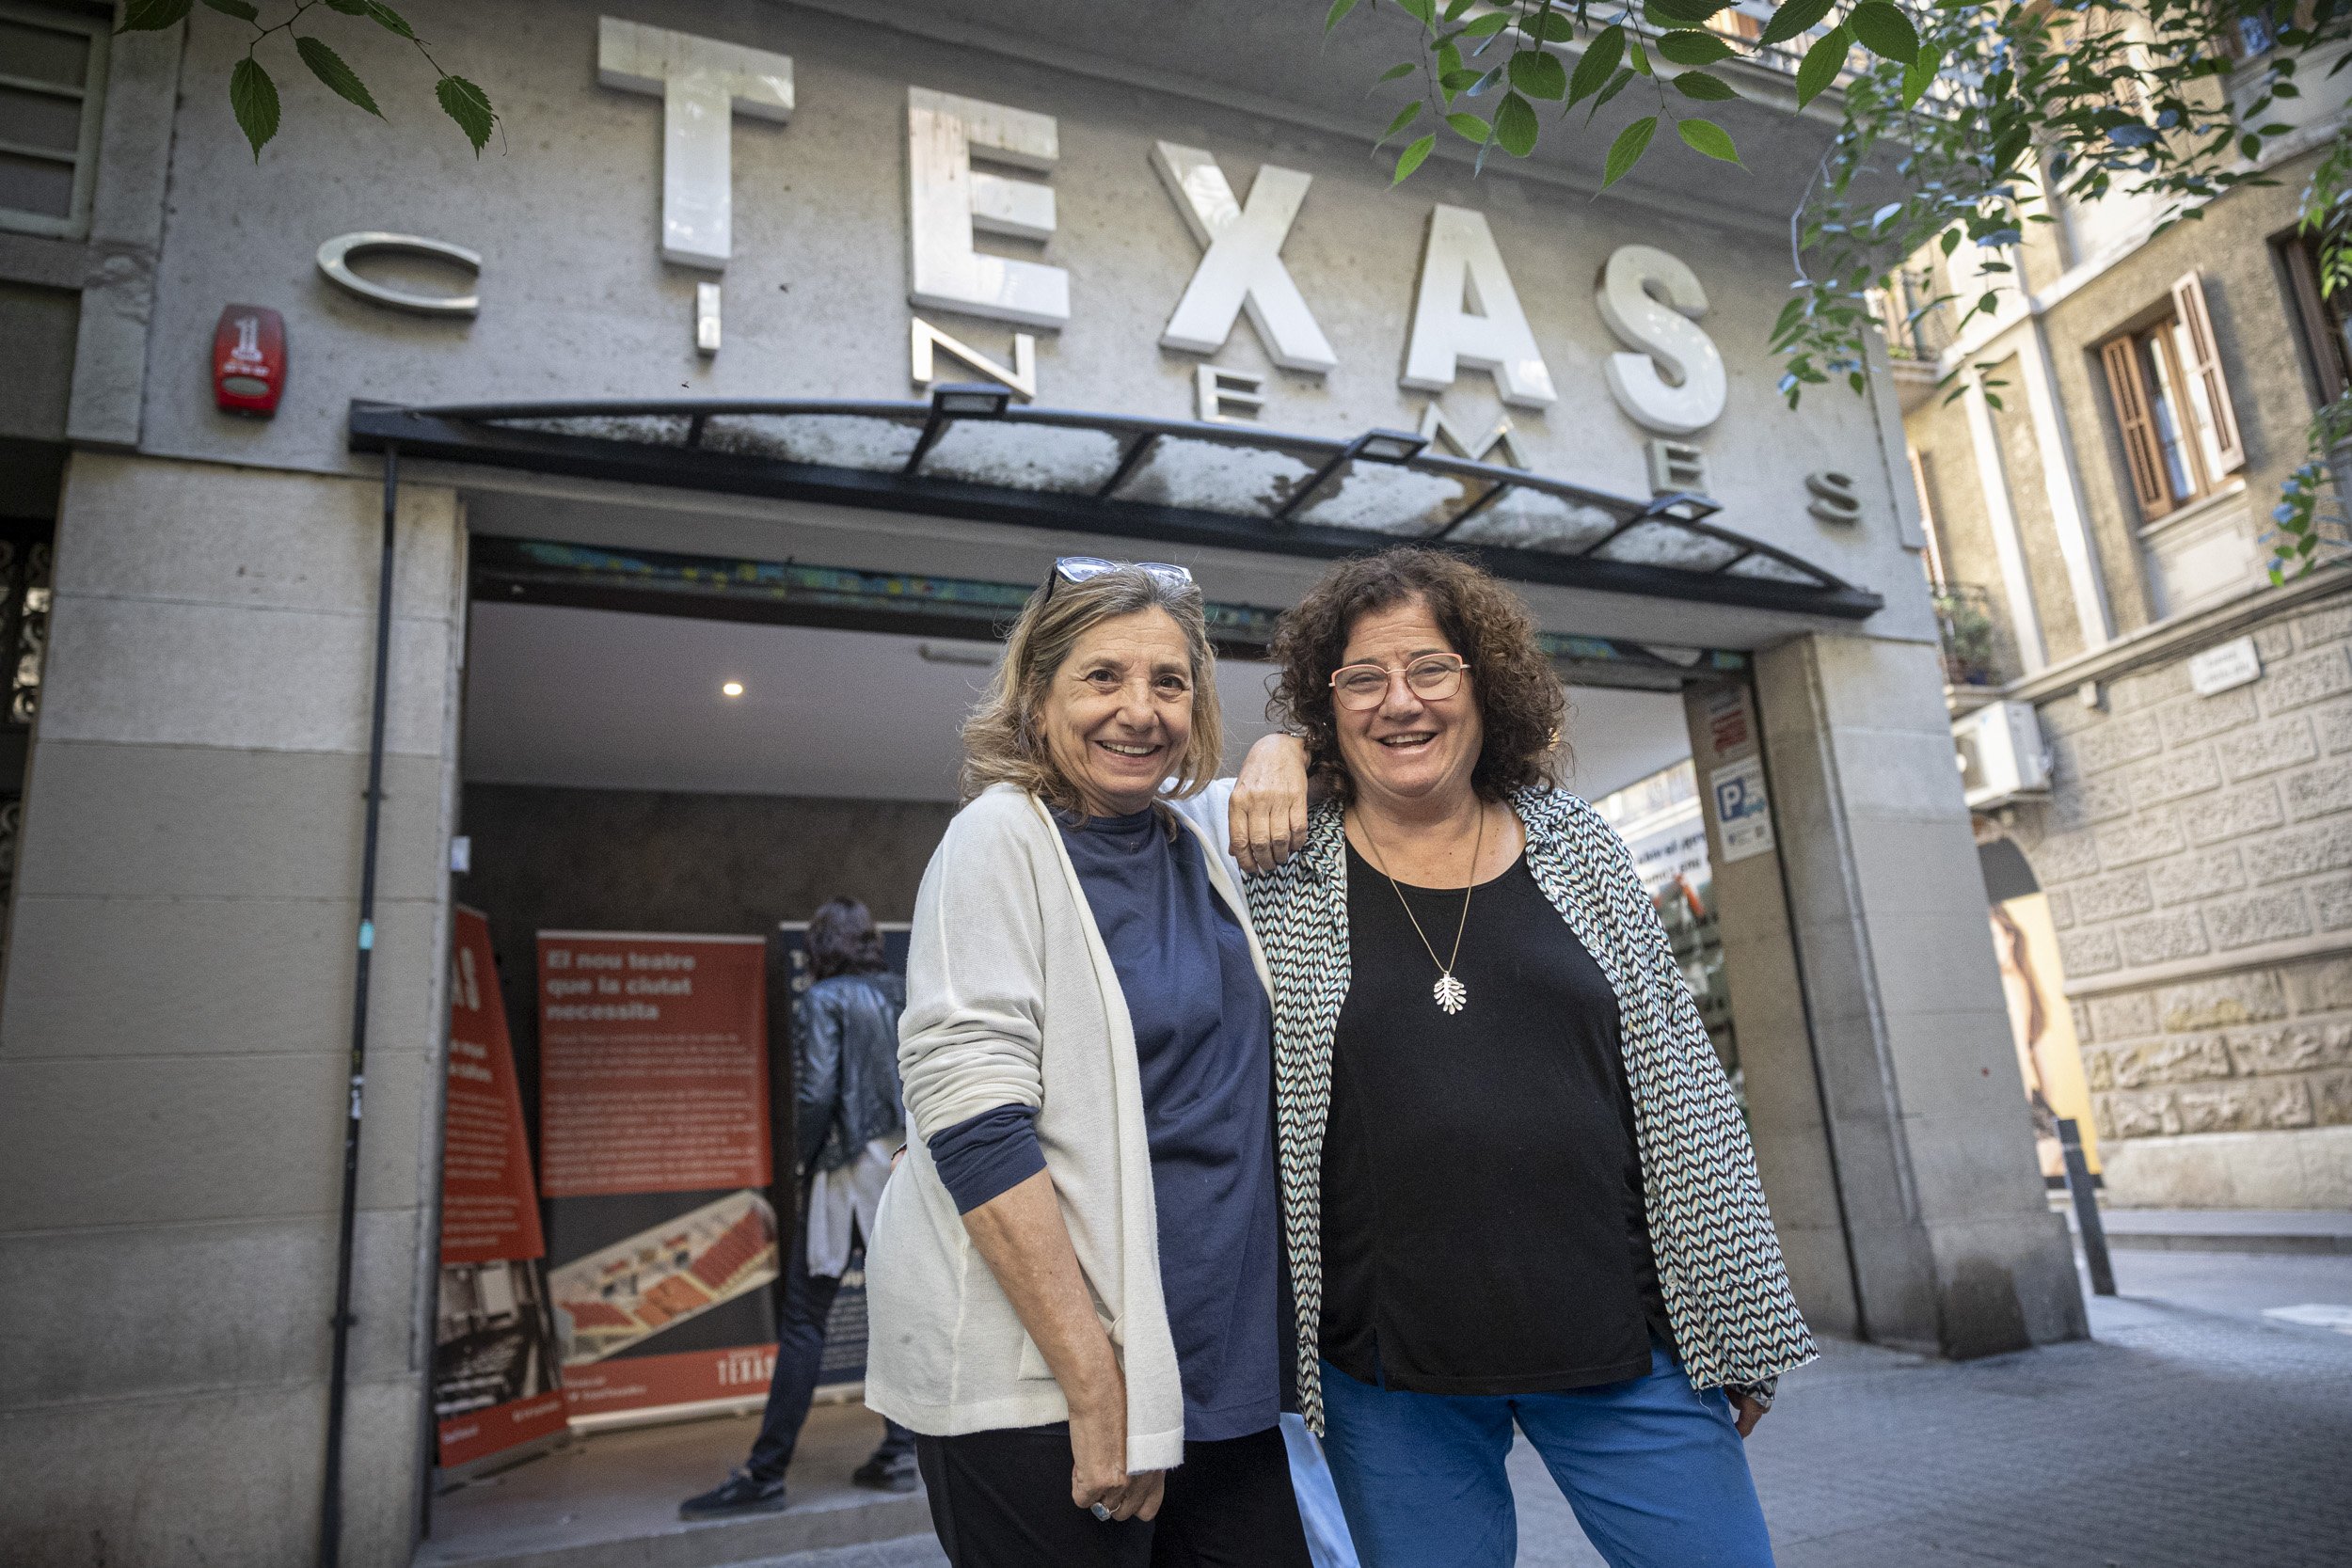 "L'espai Texas y el Paraulògic contribuirán a la salud de la lengua catalana"